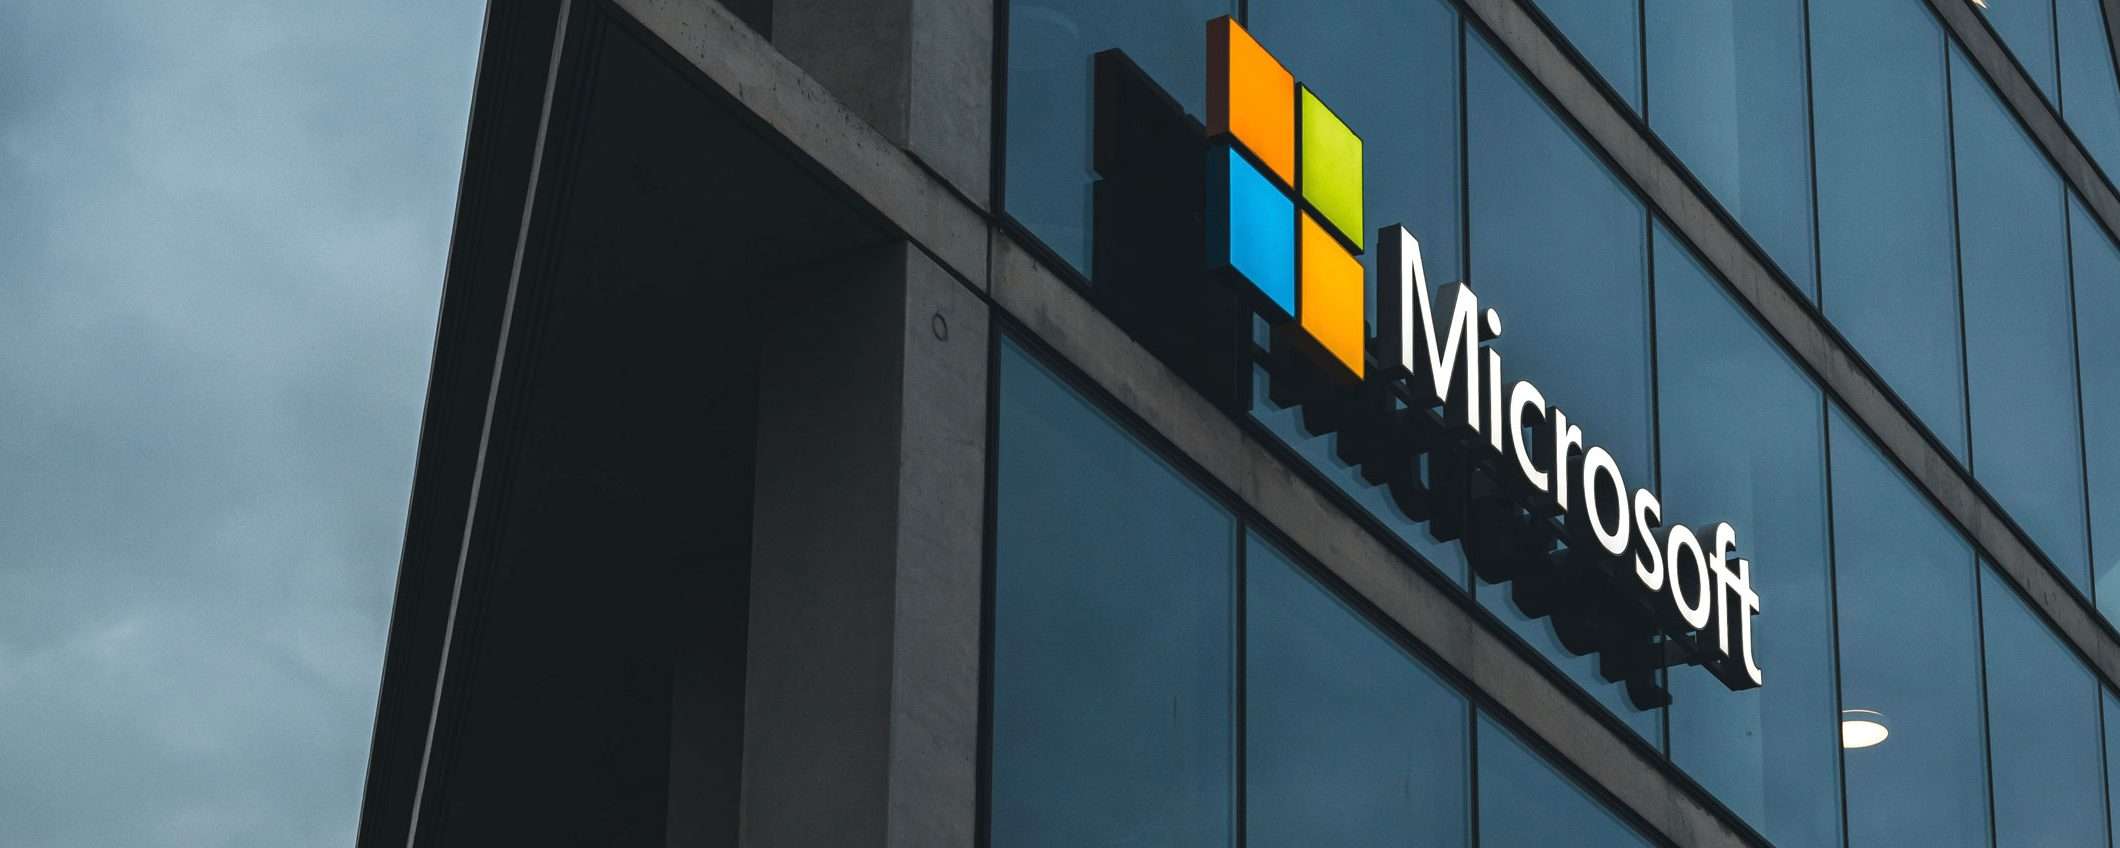 Licenziamenti in vista per 11000 dipendenti Microsoft?